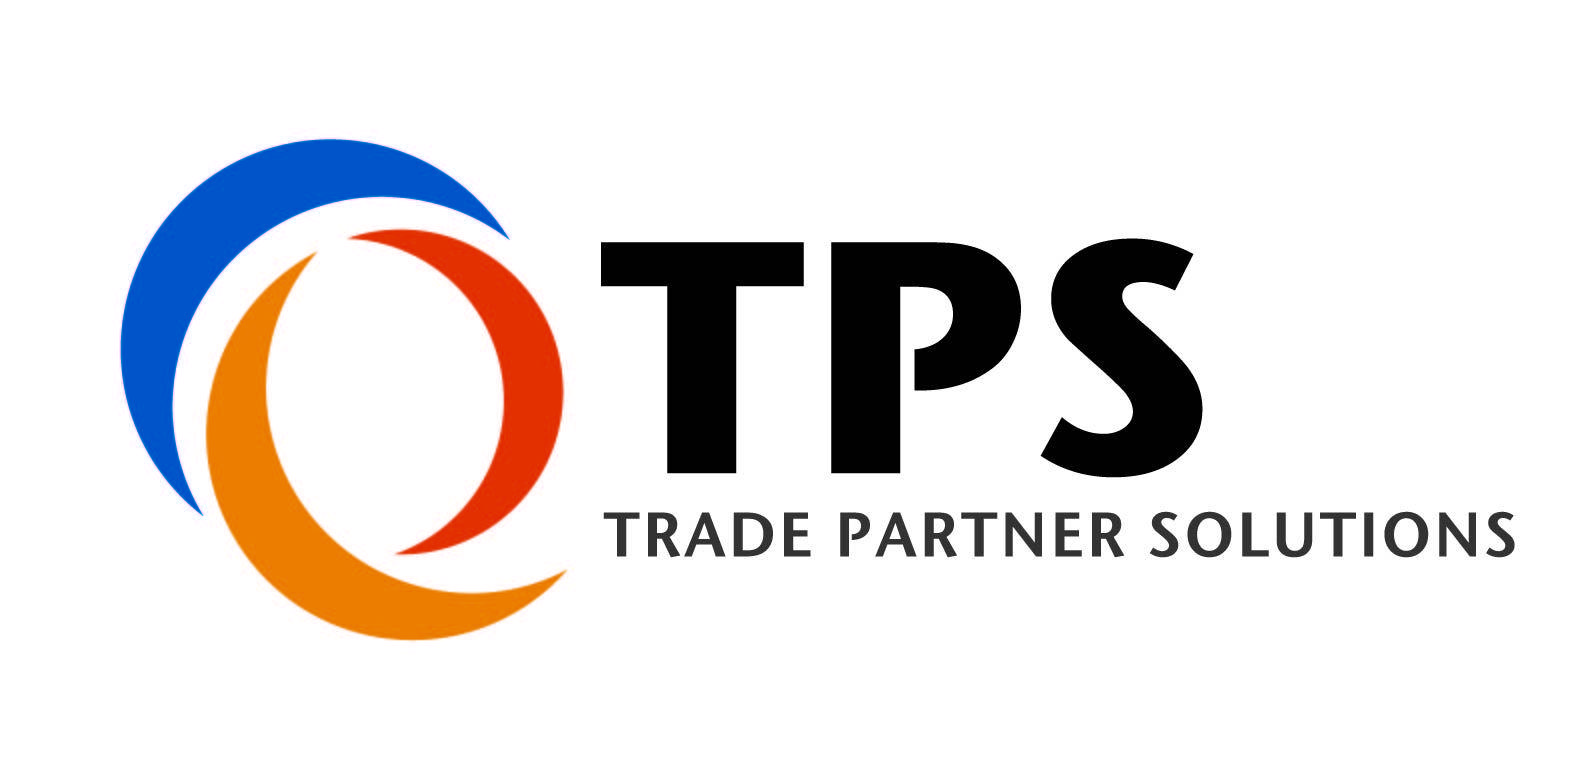 TPS Logo - TPS Logo | 29 Logo Designs for Trade Partner Solutions